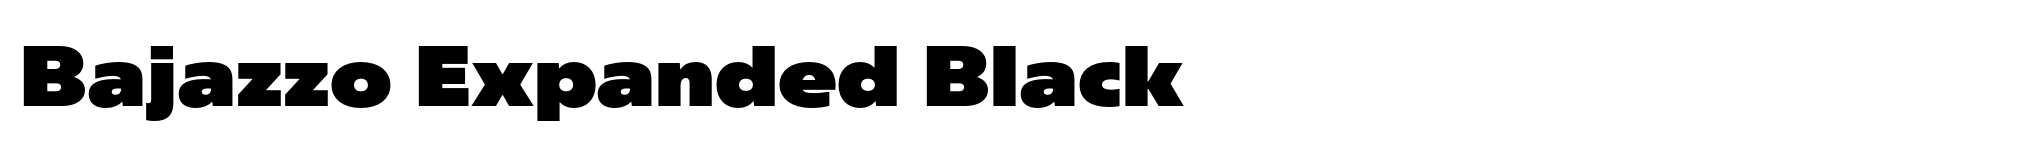 Bajazzo Expanded Black image